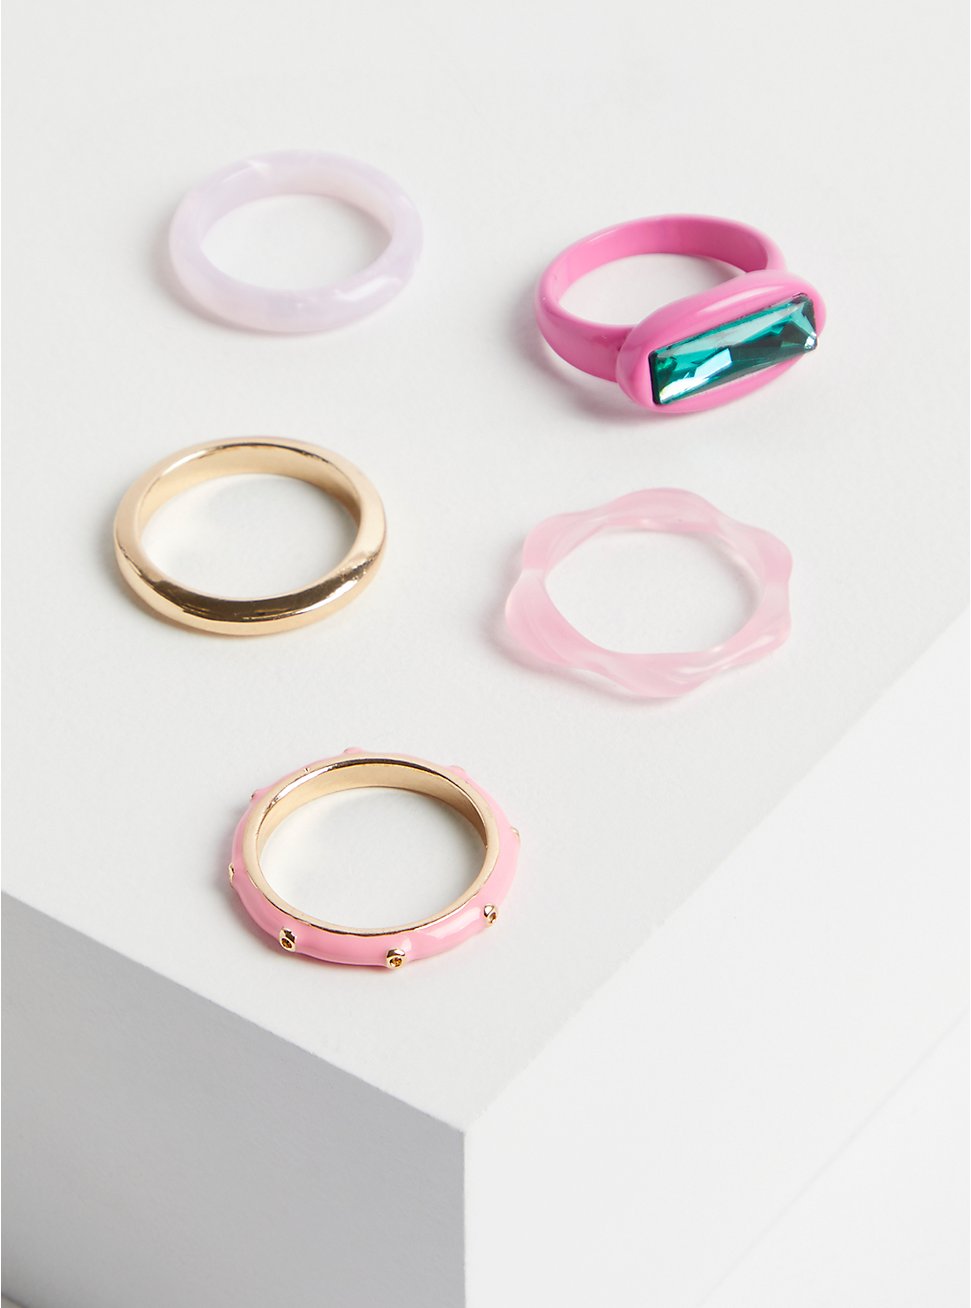 Plus Size Resin and Enamel Ring Set of 5 - Gold Tone & Pink, PINK, hi-res